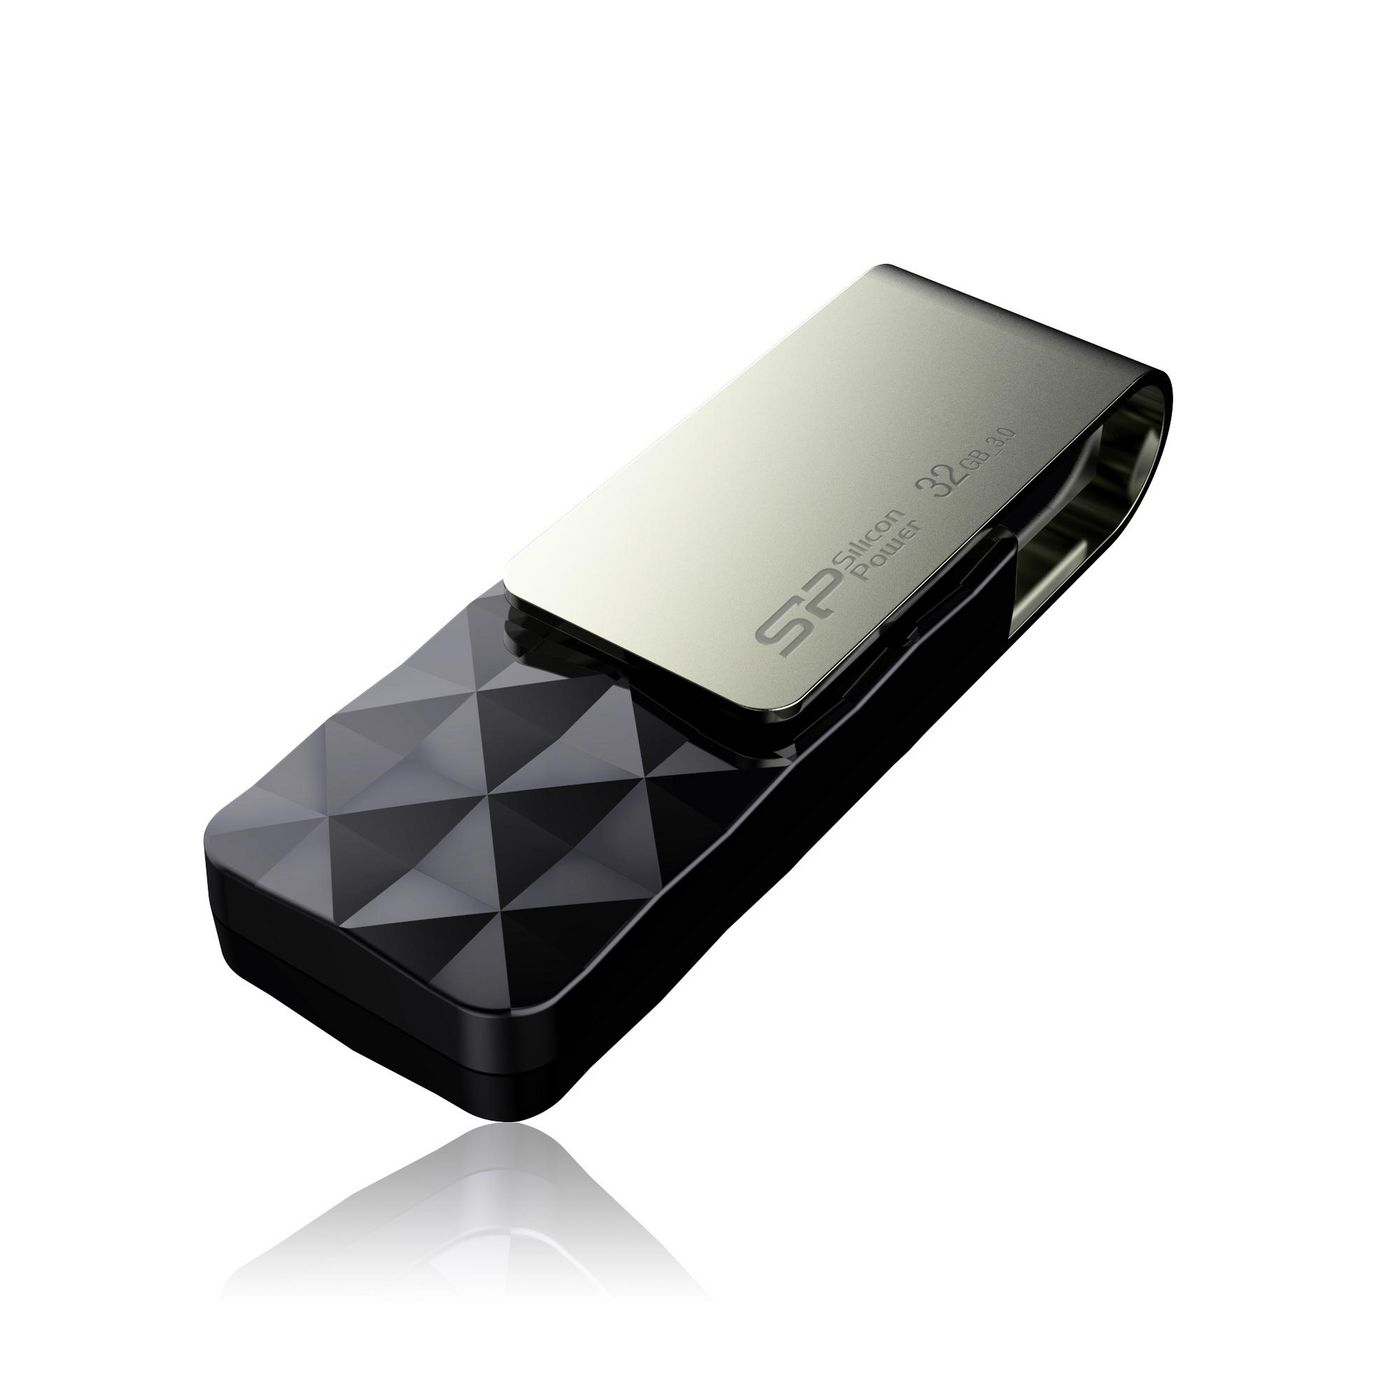 SILICON POWER SILICON-POWER USB 3.0 Pendrive B30 32GB  Black